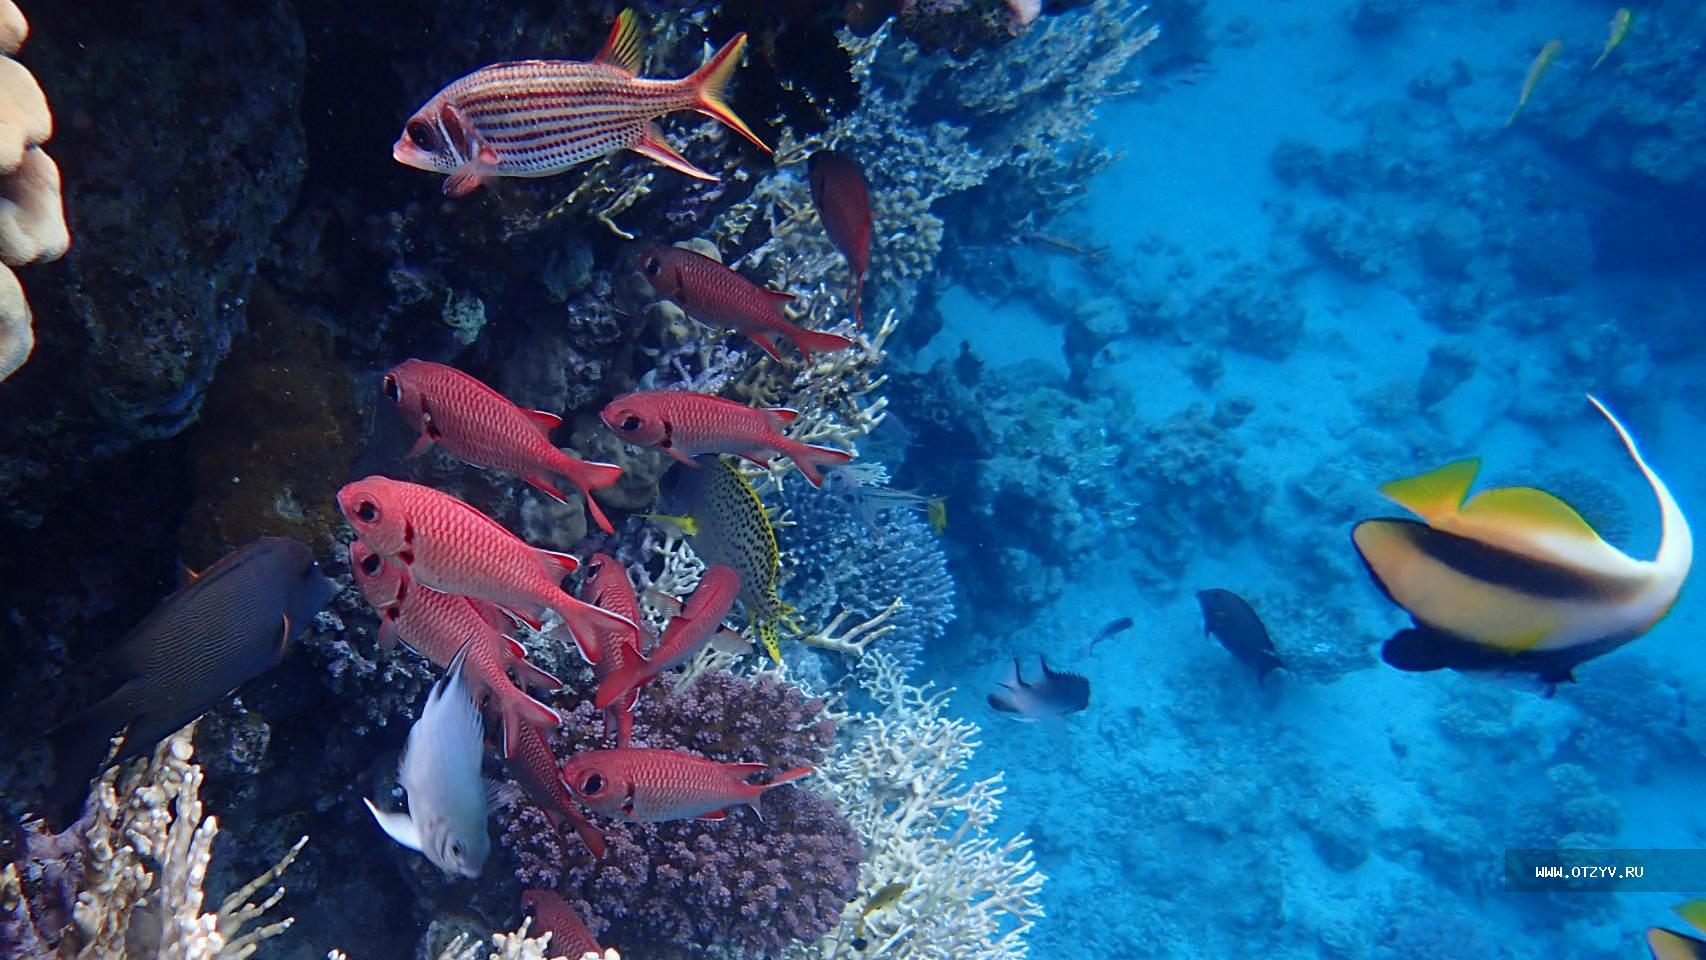 Отели шарма с коралловым рифом. Sharm Plaza риф. Sharm Plaza Coral Reef. Отель Reef reason 5* Egypt коралловый риф. Коралловый риф Сочи гостевой дом.